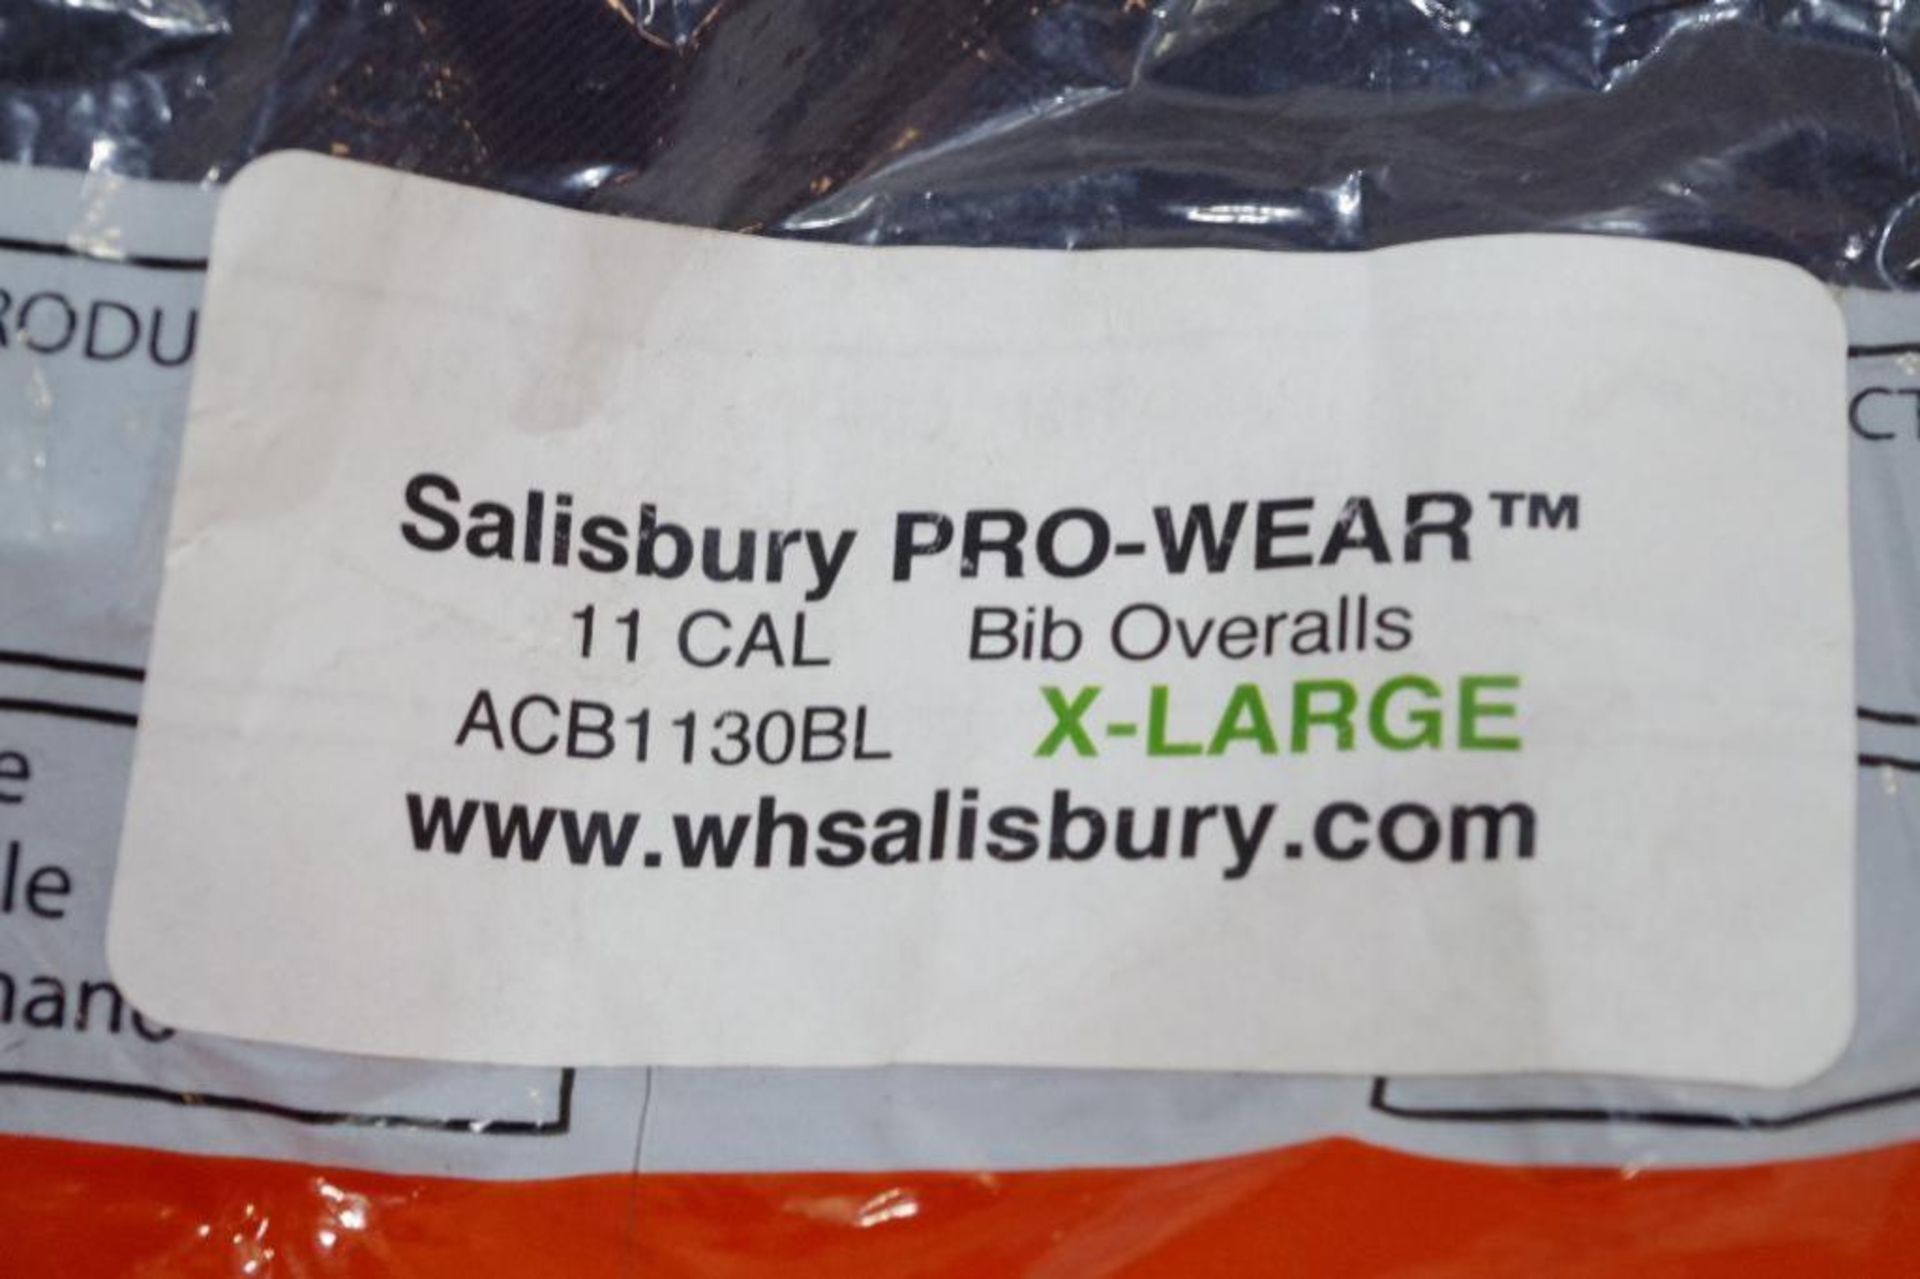 NEW SALISBURY Navy Bib Overalls, Cotton Arc Flash Resistant, Waist 40-42", Inseam 30" M/N ACB1130BLX - Image 3 of 5